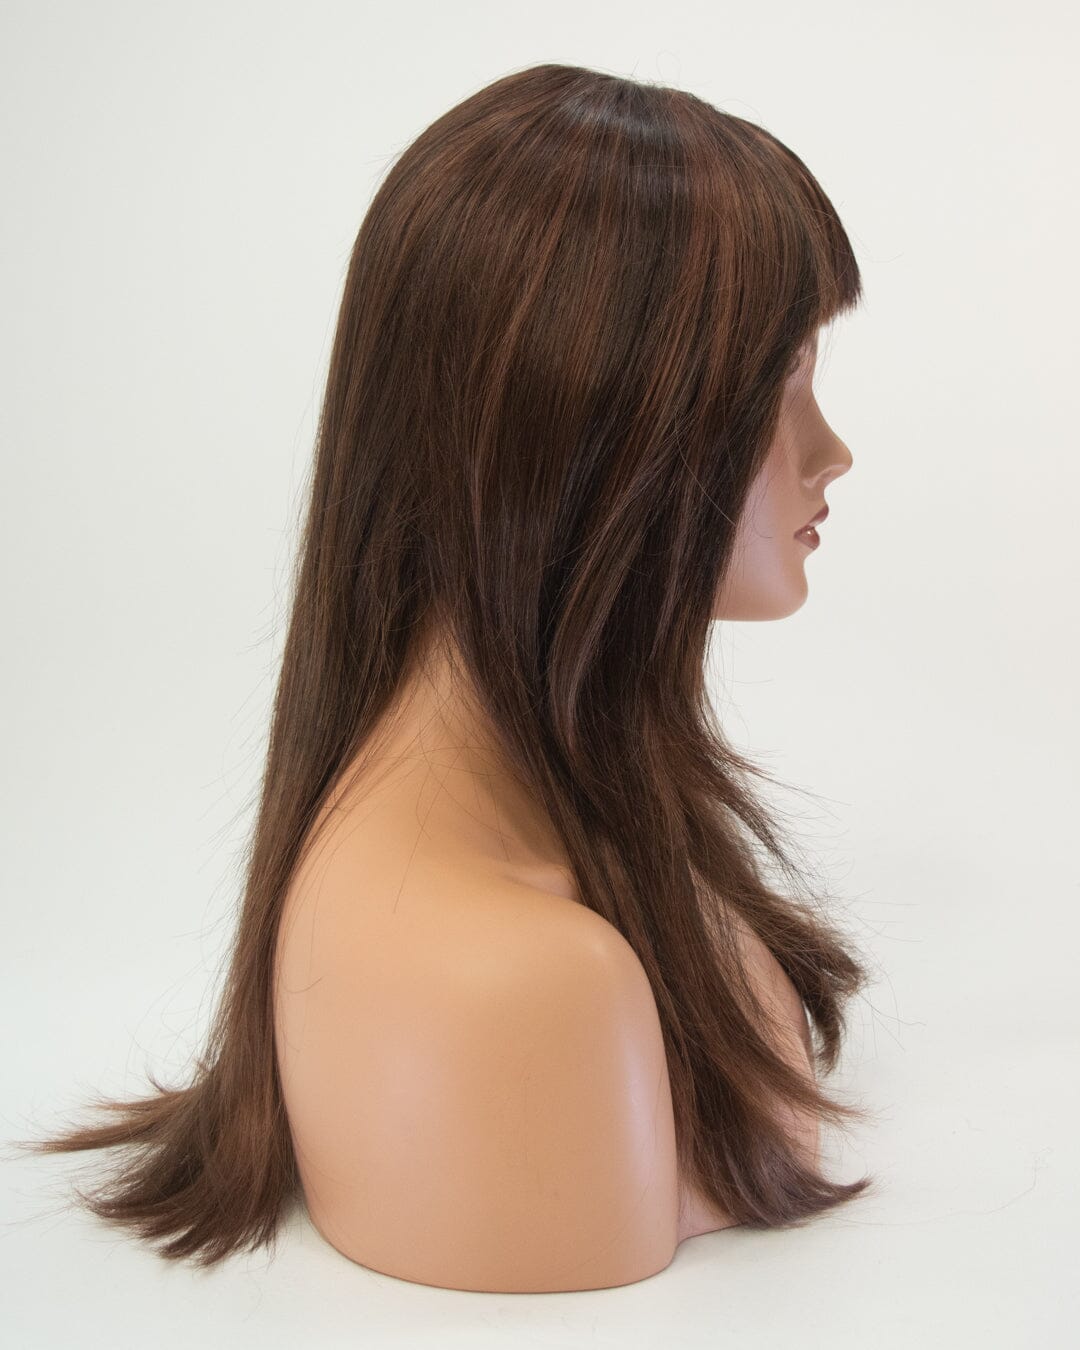 Medium Brown 55cm Synthetic Hair Wig